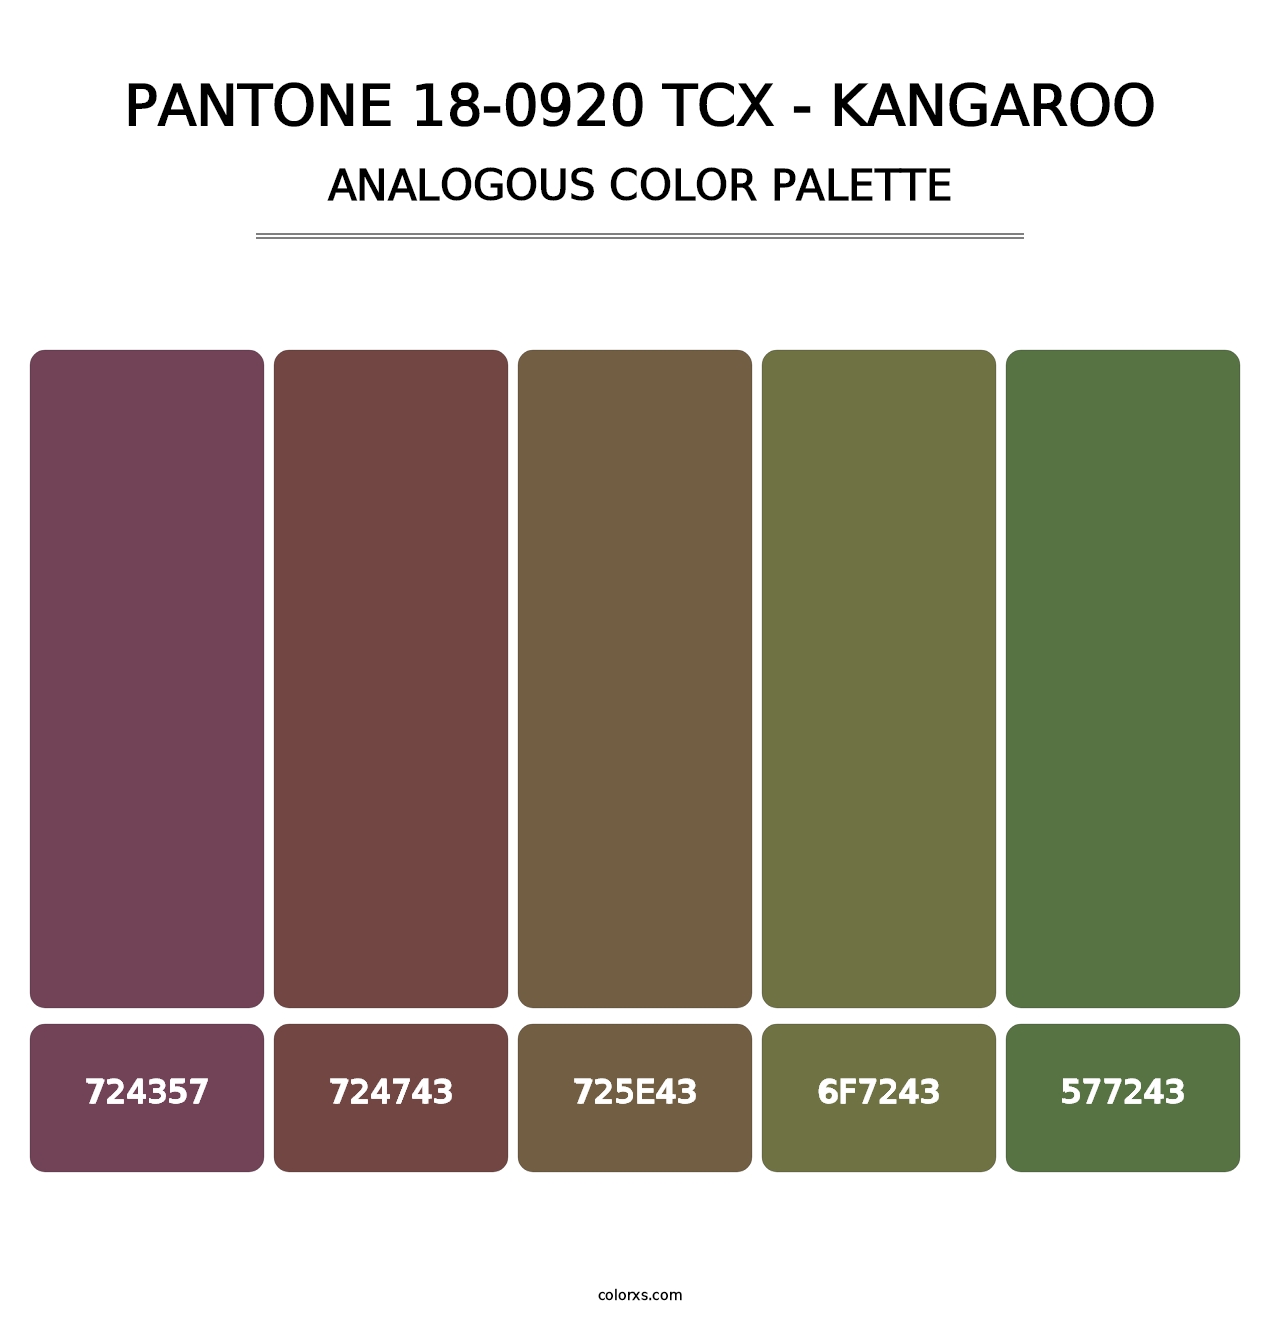 PANTONE 18-0920 TCX - Kangaroo - Analogous Color Palette